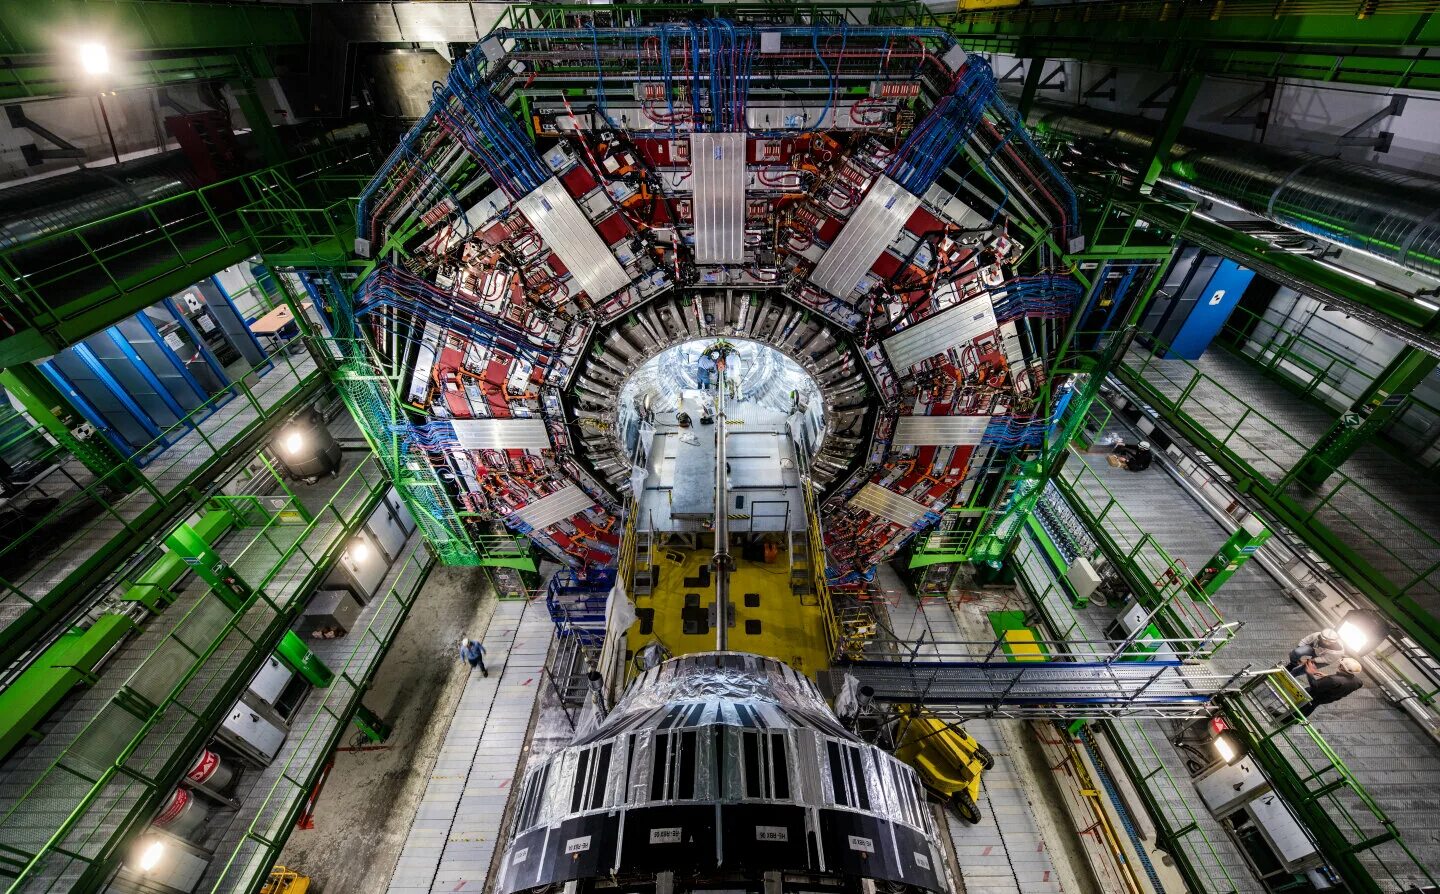 Швейцария ЦЕРН коллайдер. Адронный коллайдер ЦЕРН. Большой адронный коллайдер ЦЕРН. Большой адронный коллайдер в Швейцарии. Андроидный коллайдер это